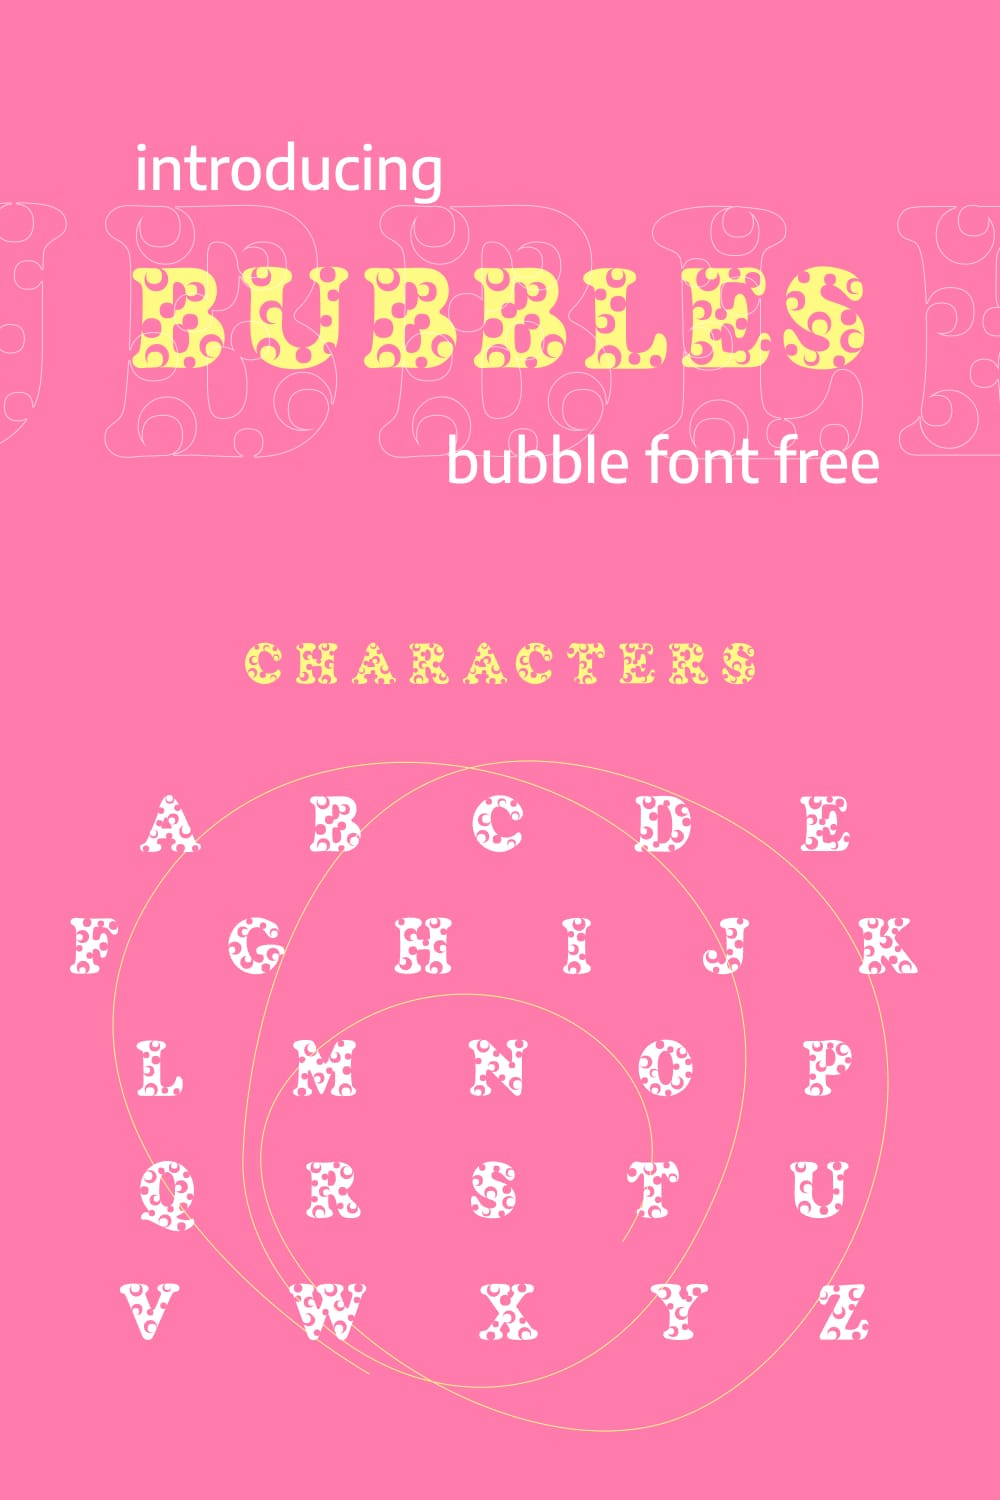 Pinterest Alphabet example Bubble font free by MasterBundles.